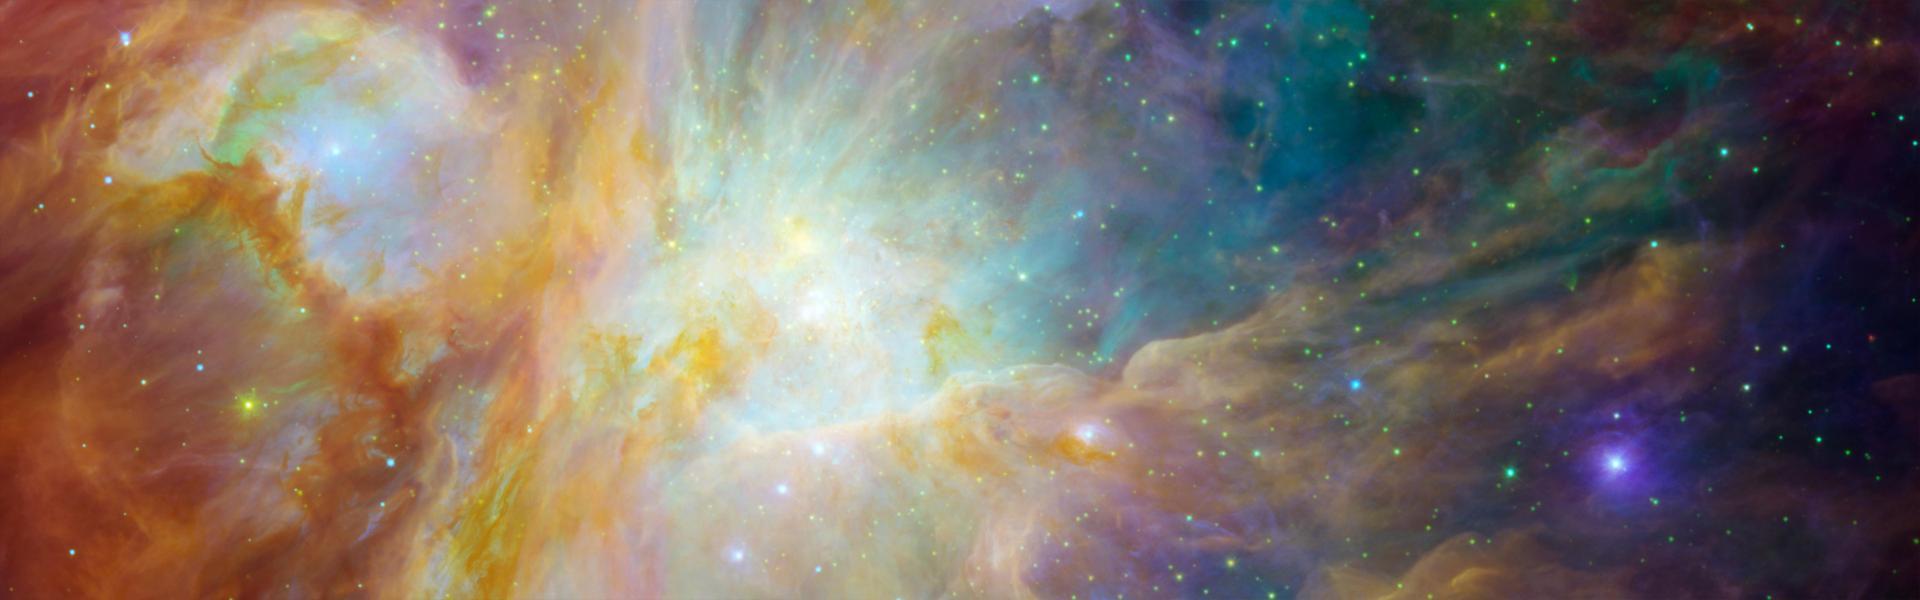 Orion nebula galaxy free desktop background wallpaper image